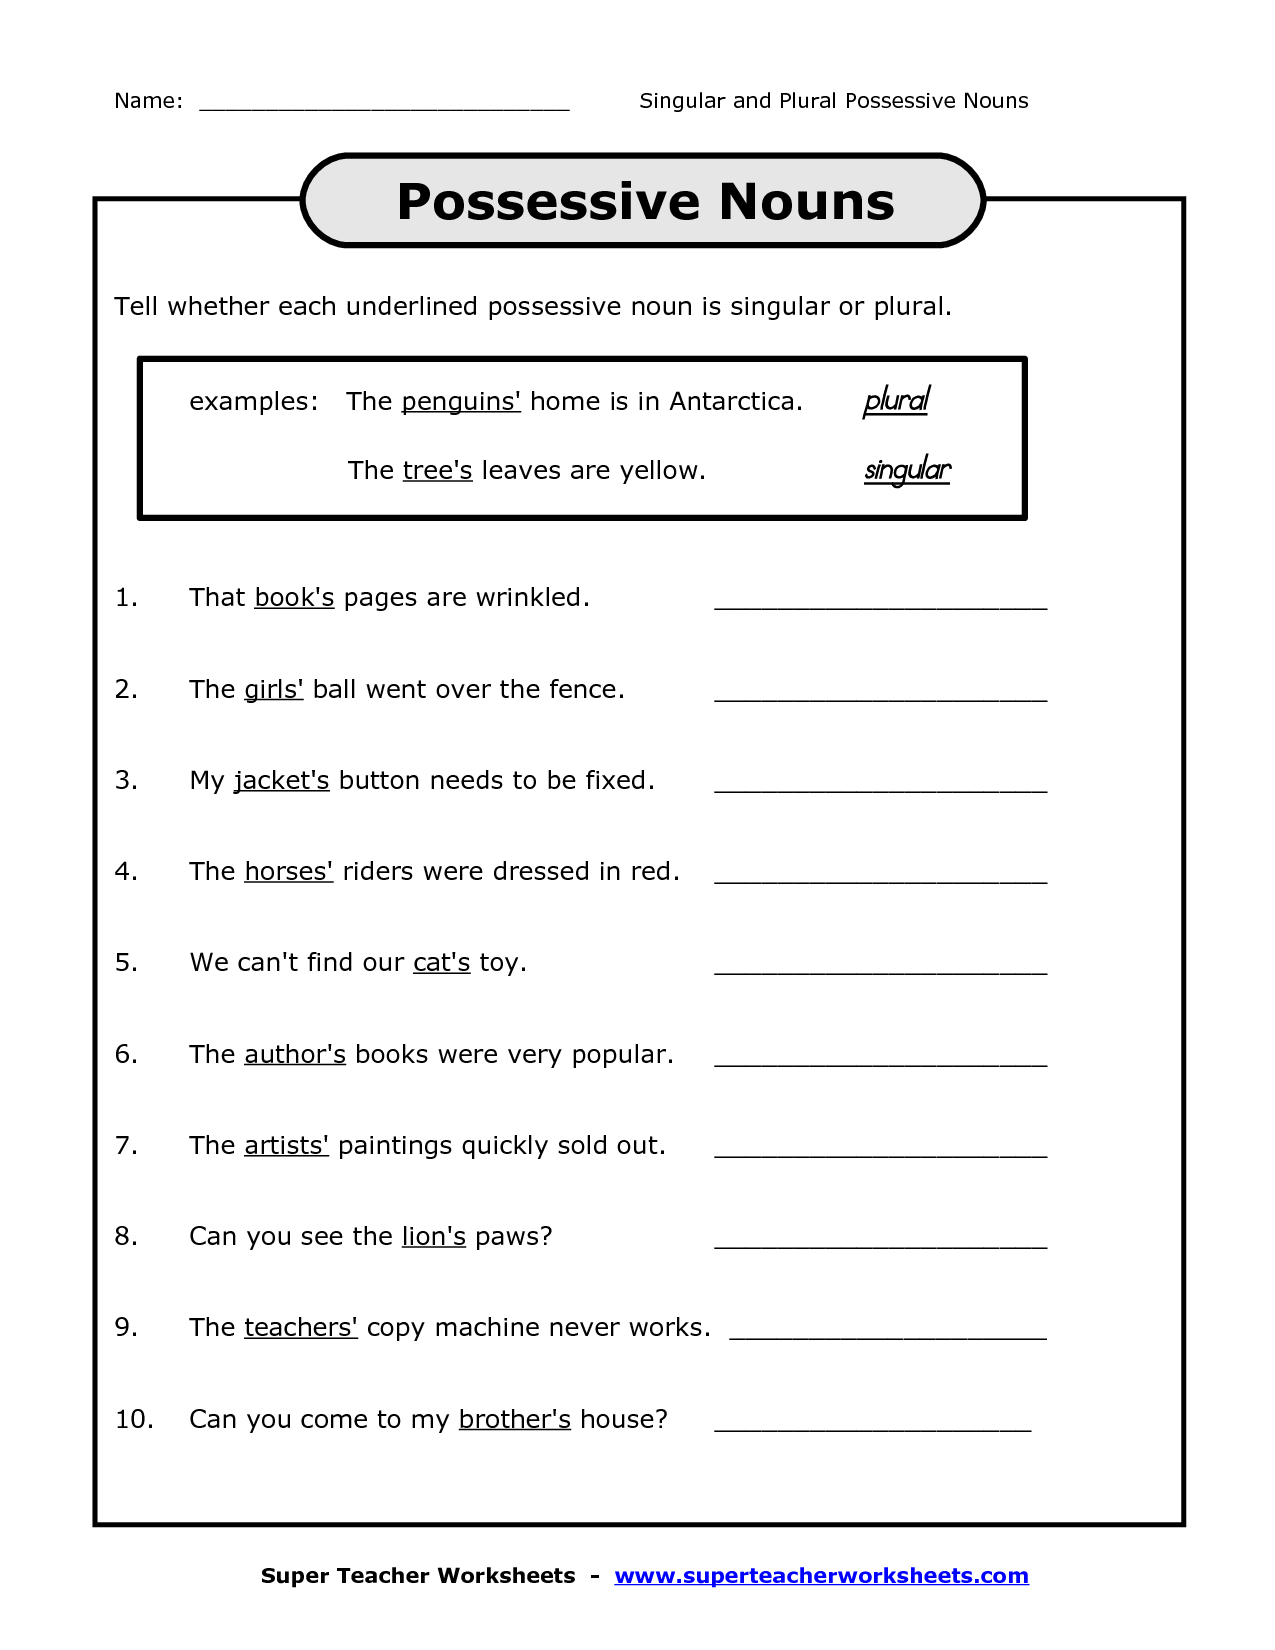 Plural Possessive Nouns Worksheets 2nd Grade